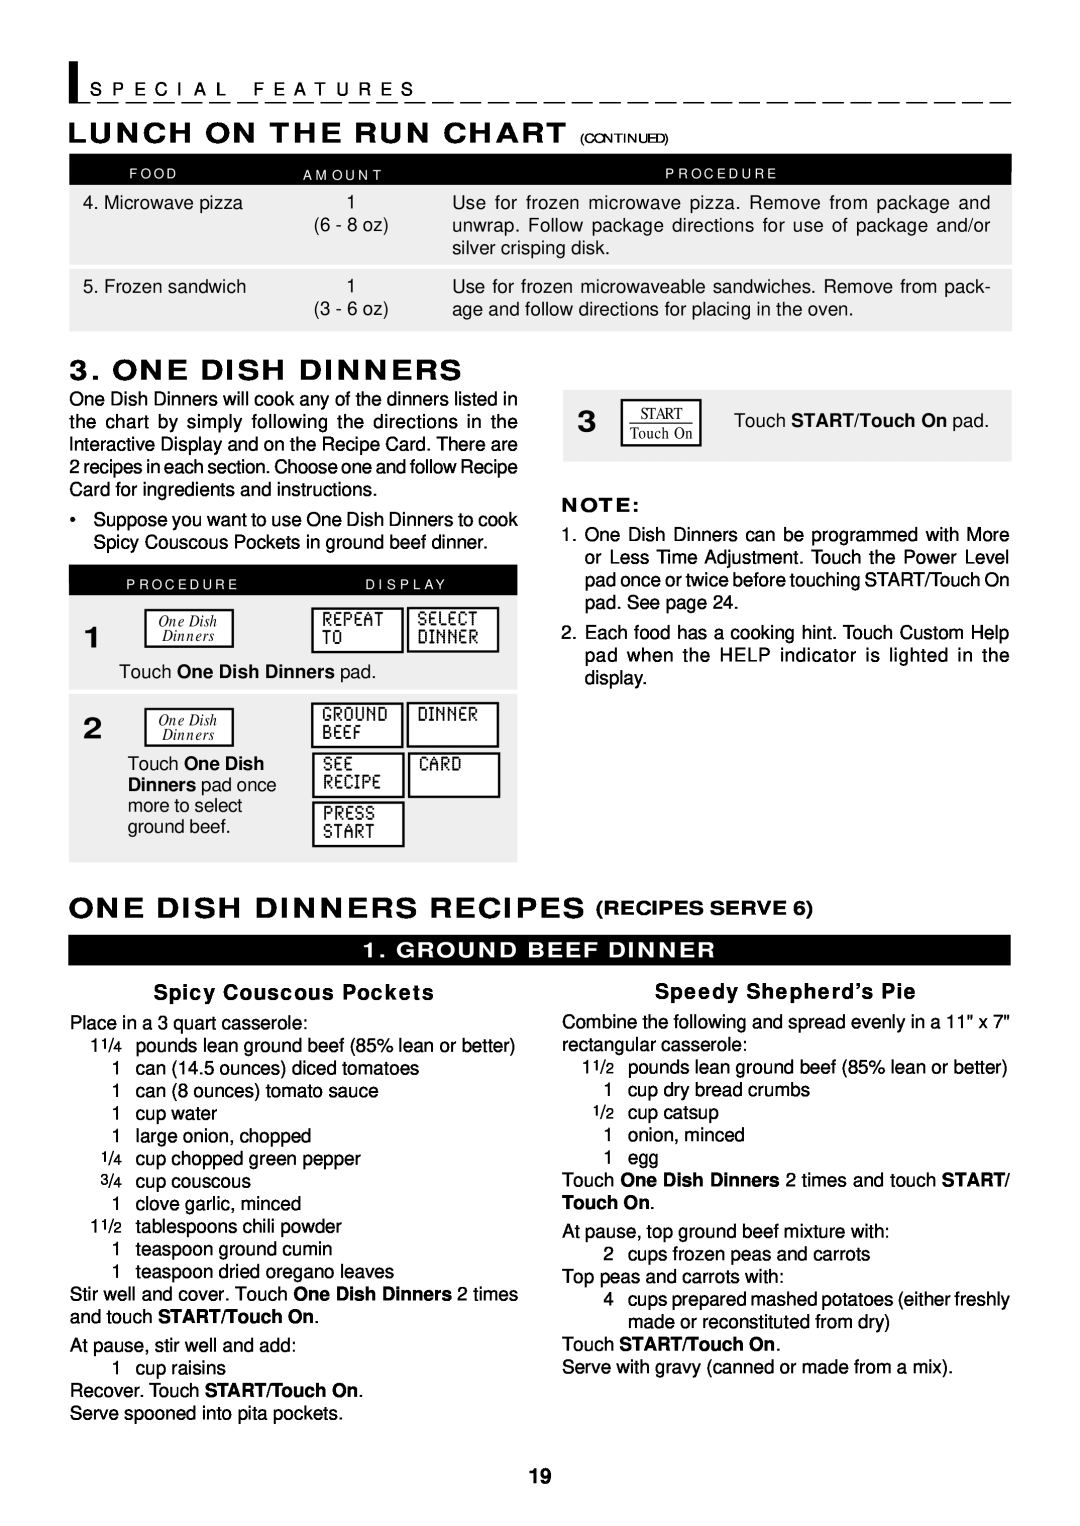 Sharp R-1611 Lunch On The Run Chart Continued, One Dish Dinners Recipes Recipes Serve, S P E C I A L F E A T U R E S 